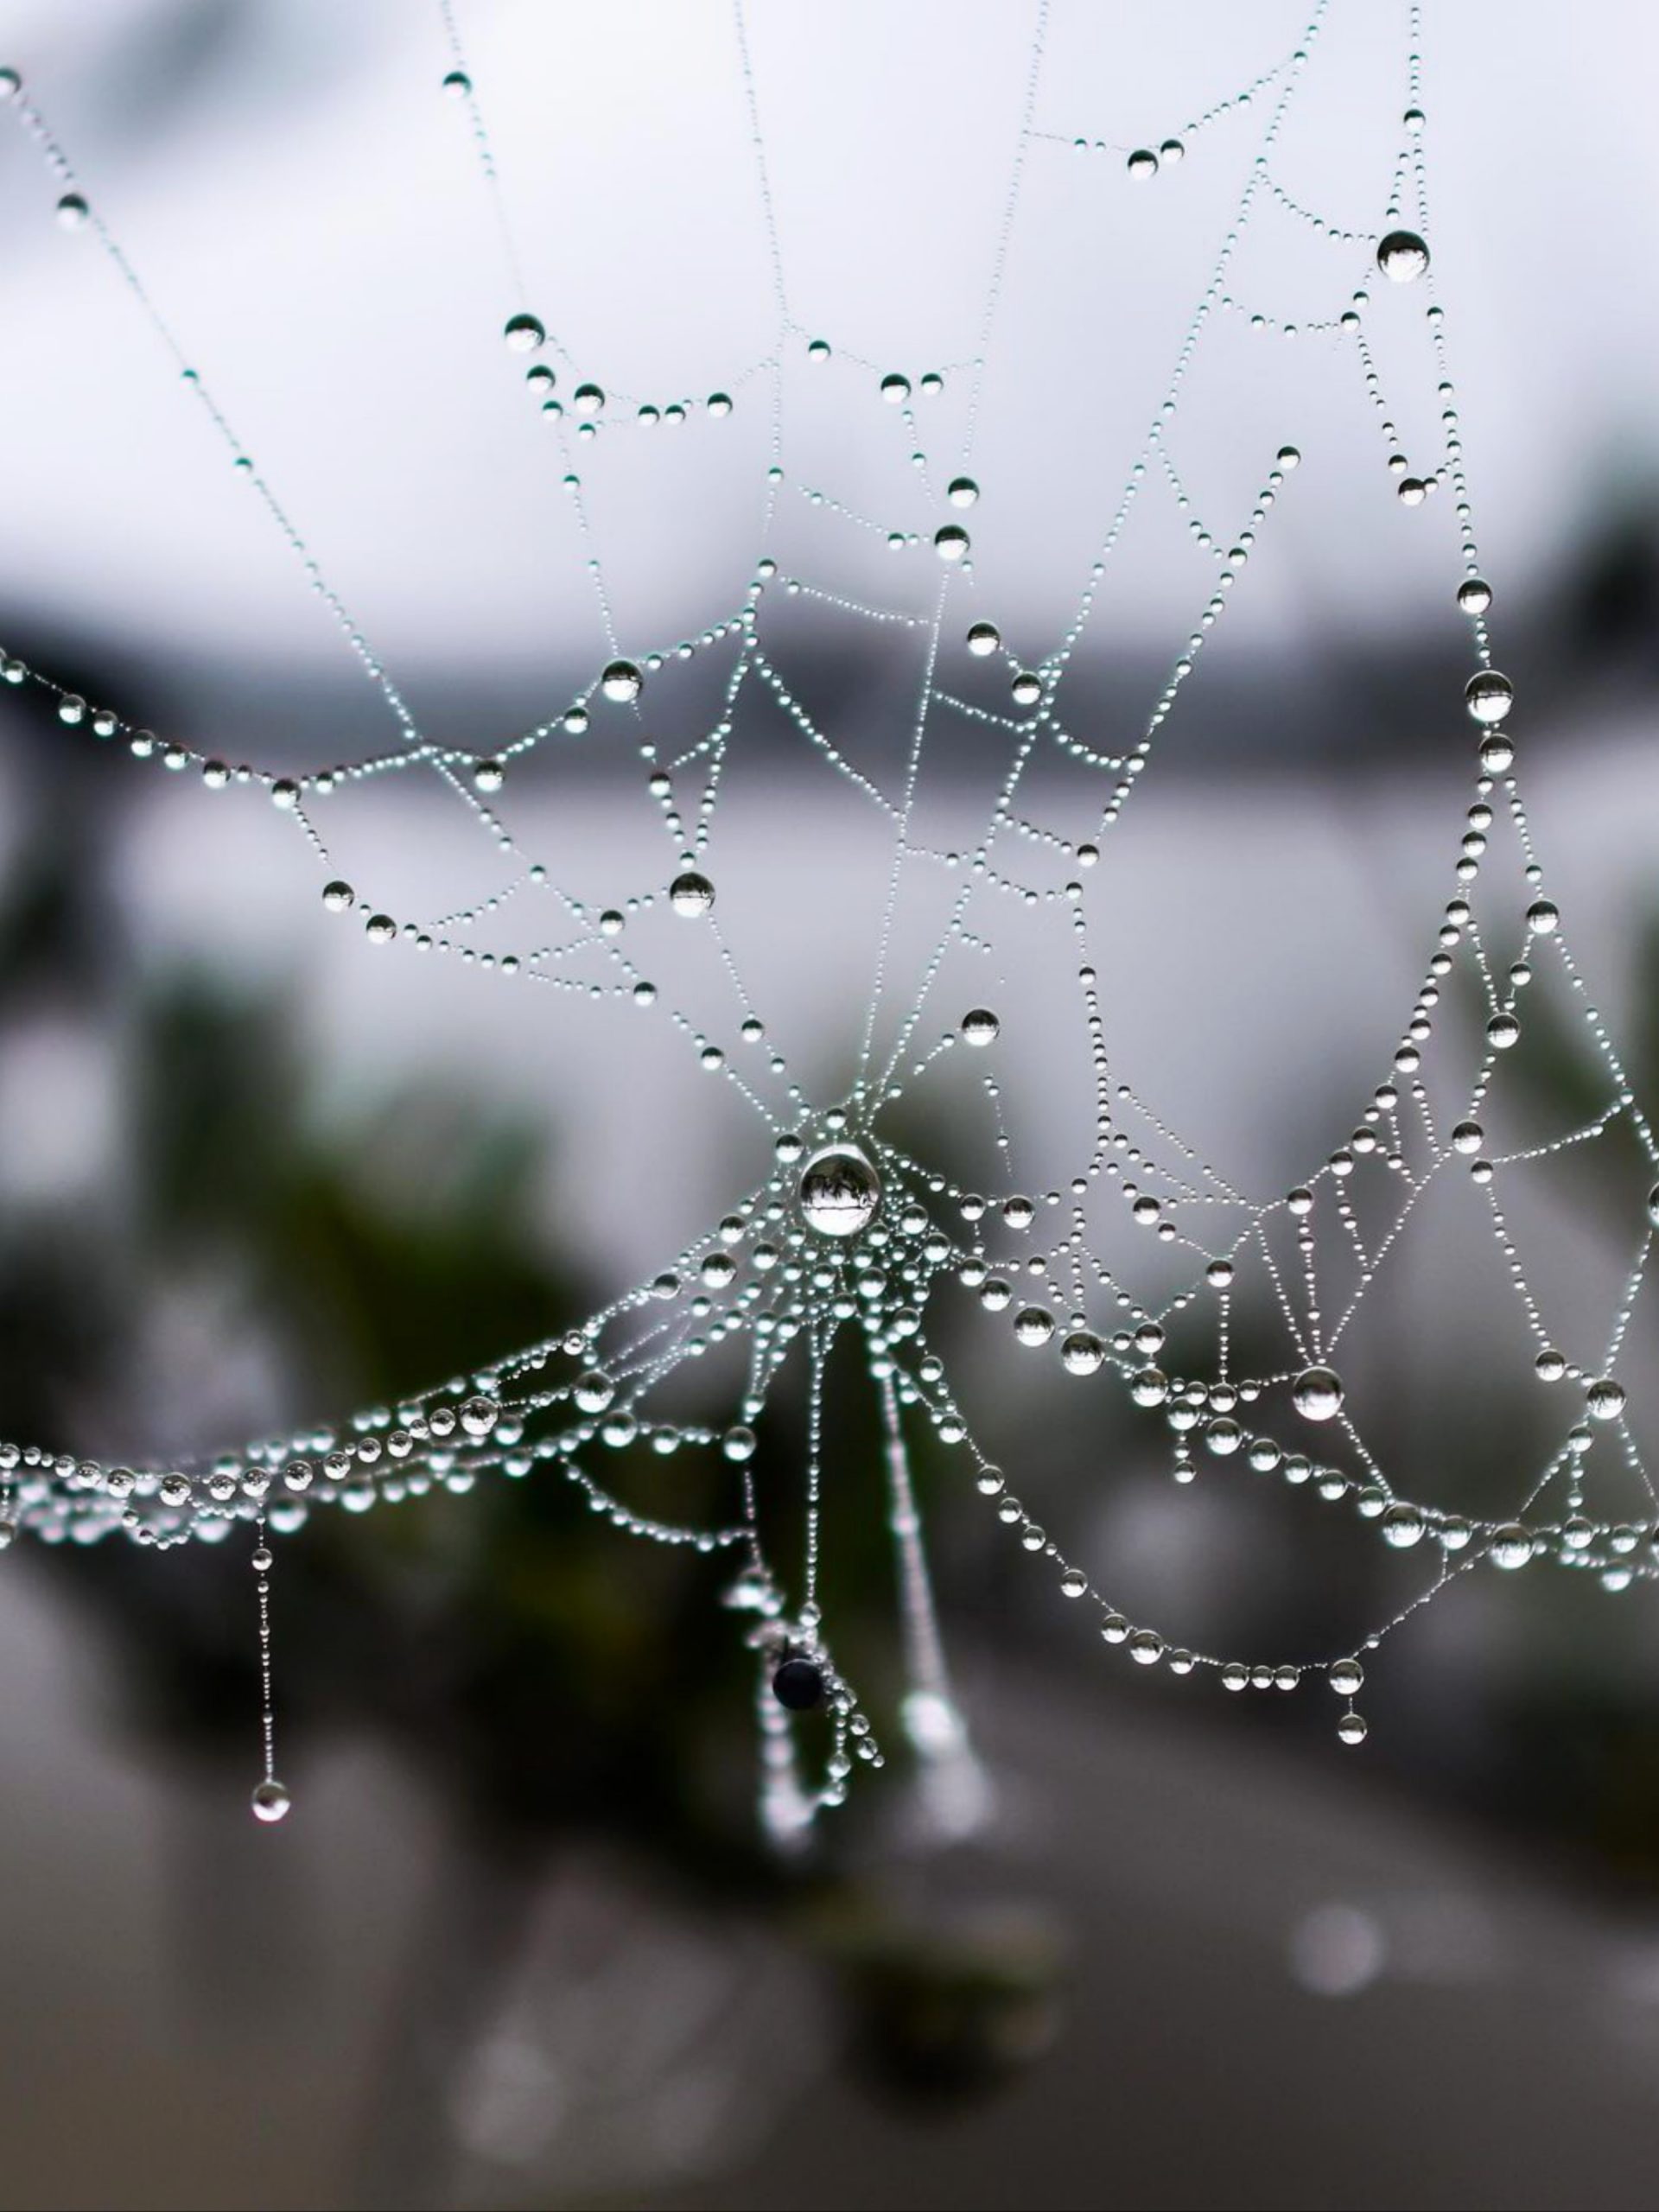 Water drops on Web